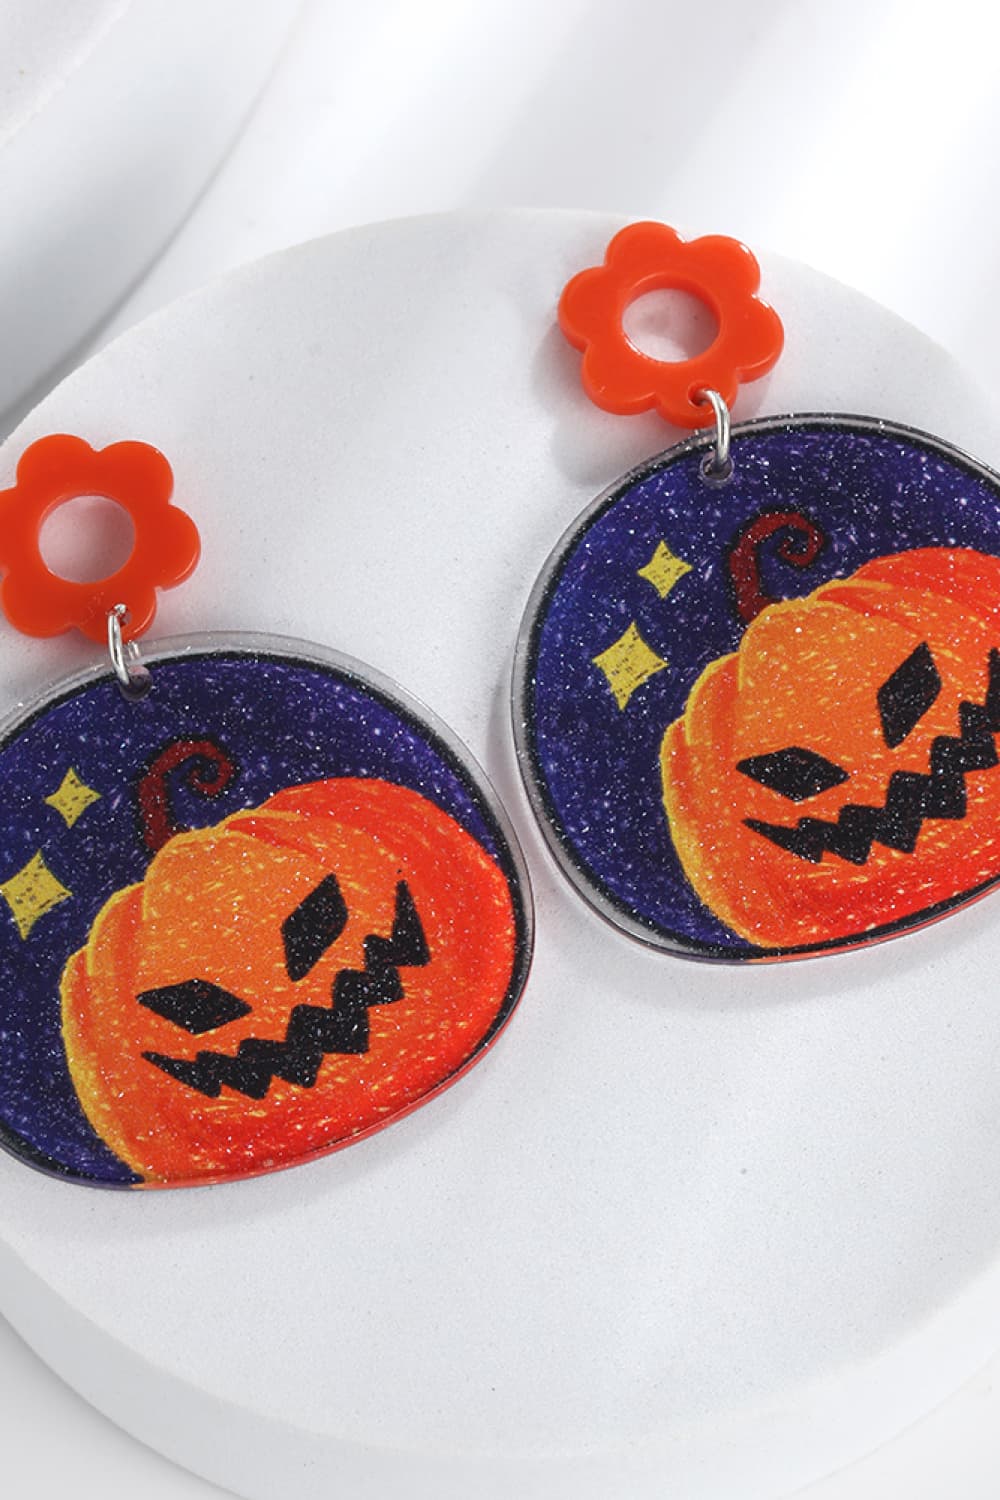 Halloween Theme Earrings Trendsi